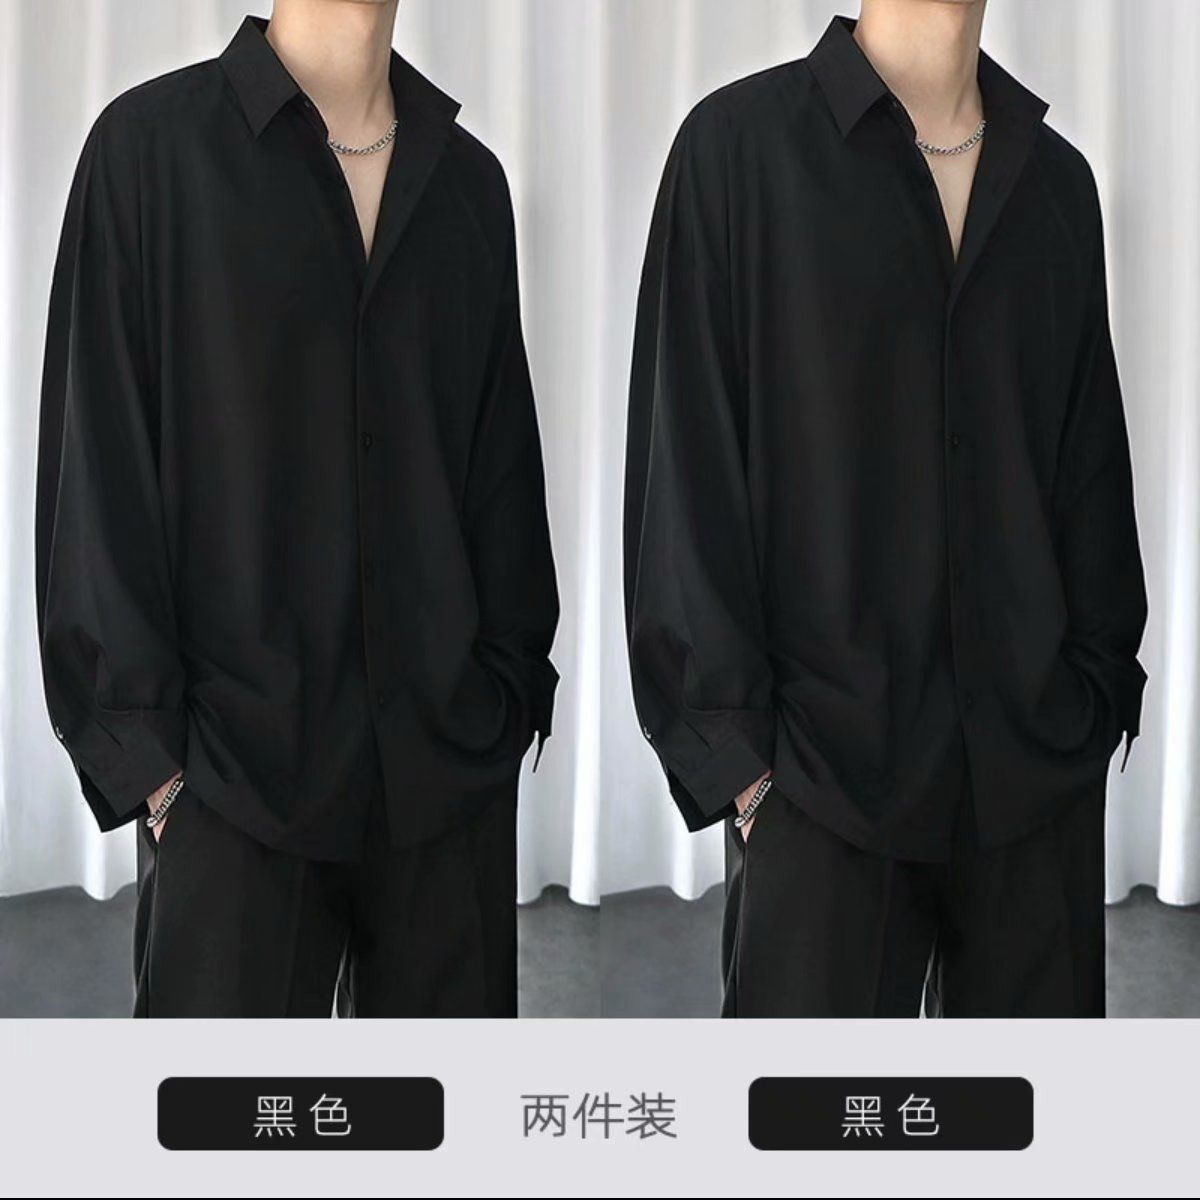 Very Fairy Shirt Male Ruffian Handsome Black Korean Trendy Inch Shirt Long Sleeve Loose Casual Drape Men's Shirt Set